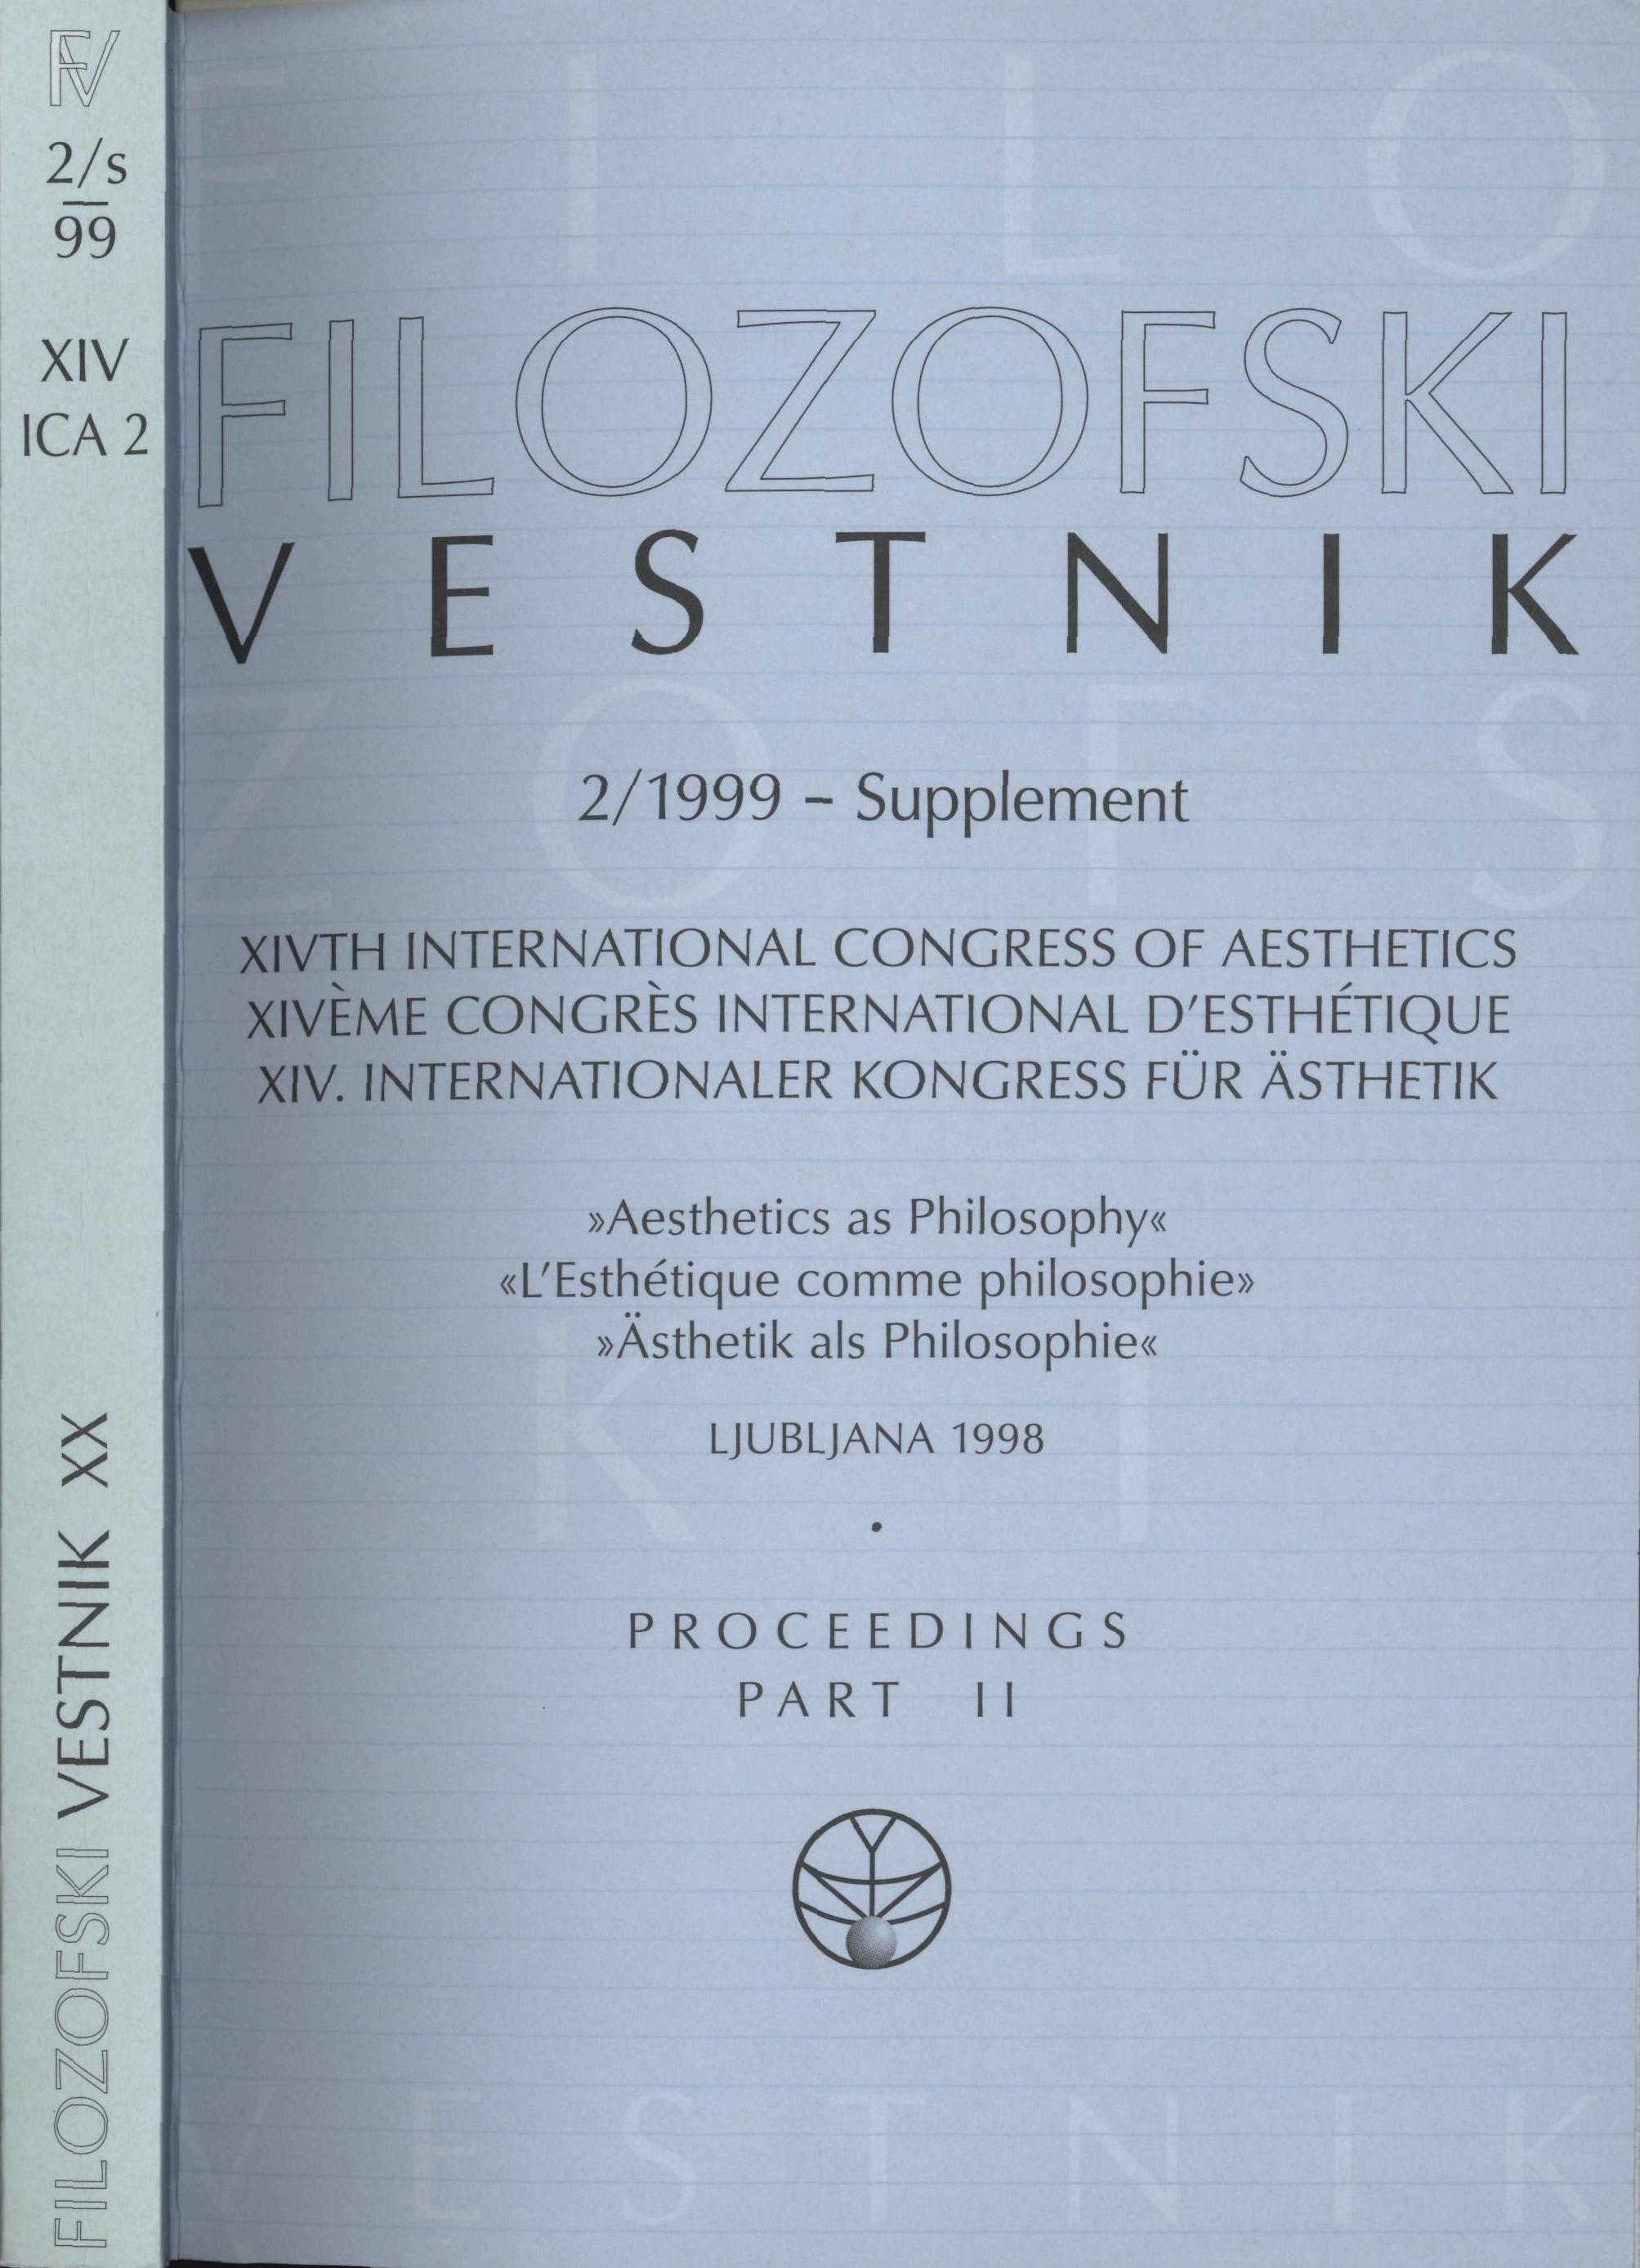 					View Vol. 20 No. 2/s (1999): XIVth International Congress of Aesthetics, "Aesthetics as Philosophy", Proceedings, Part II
				